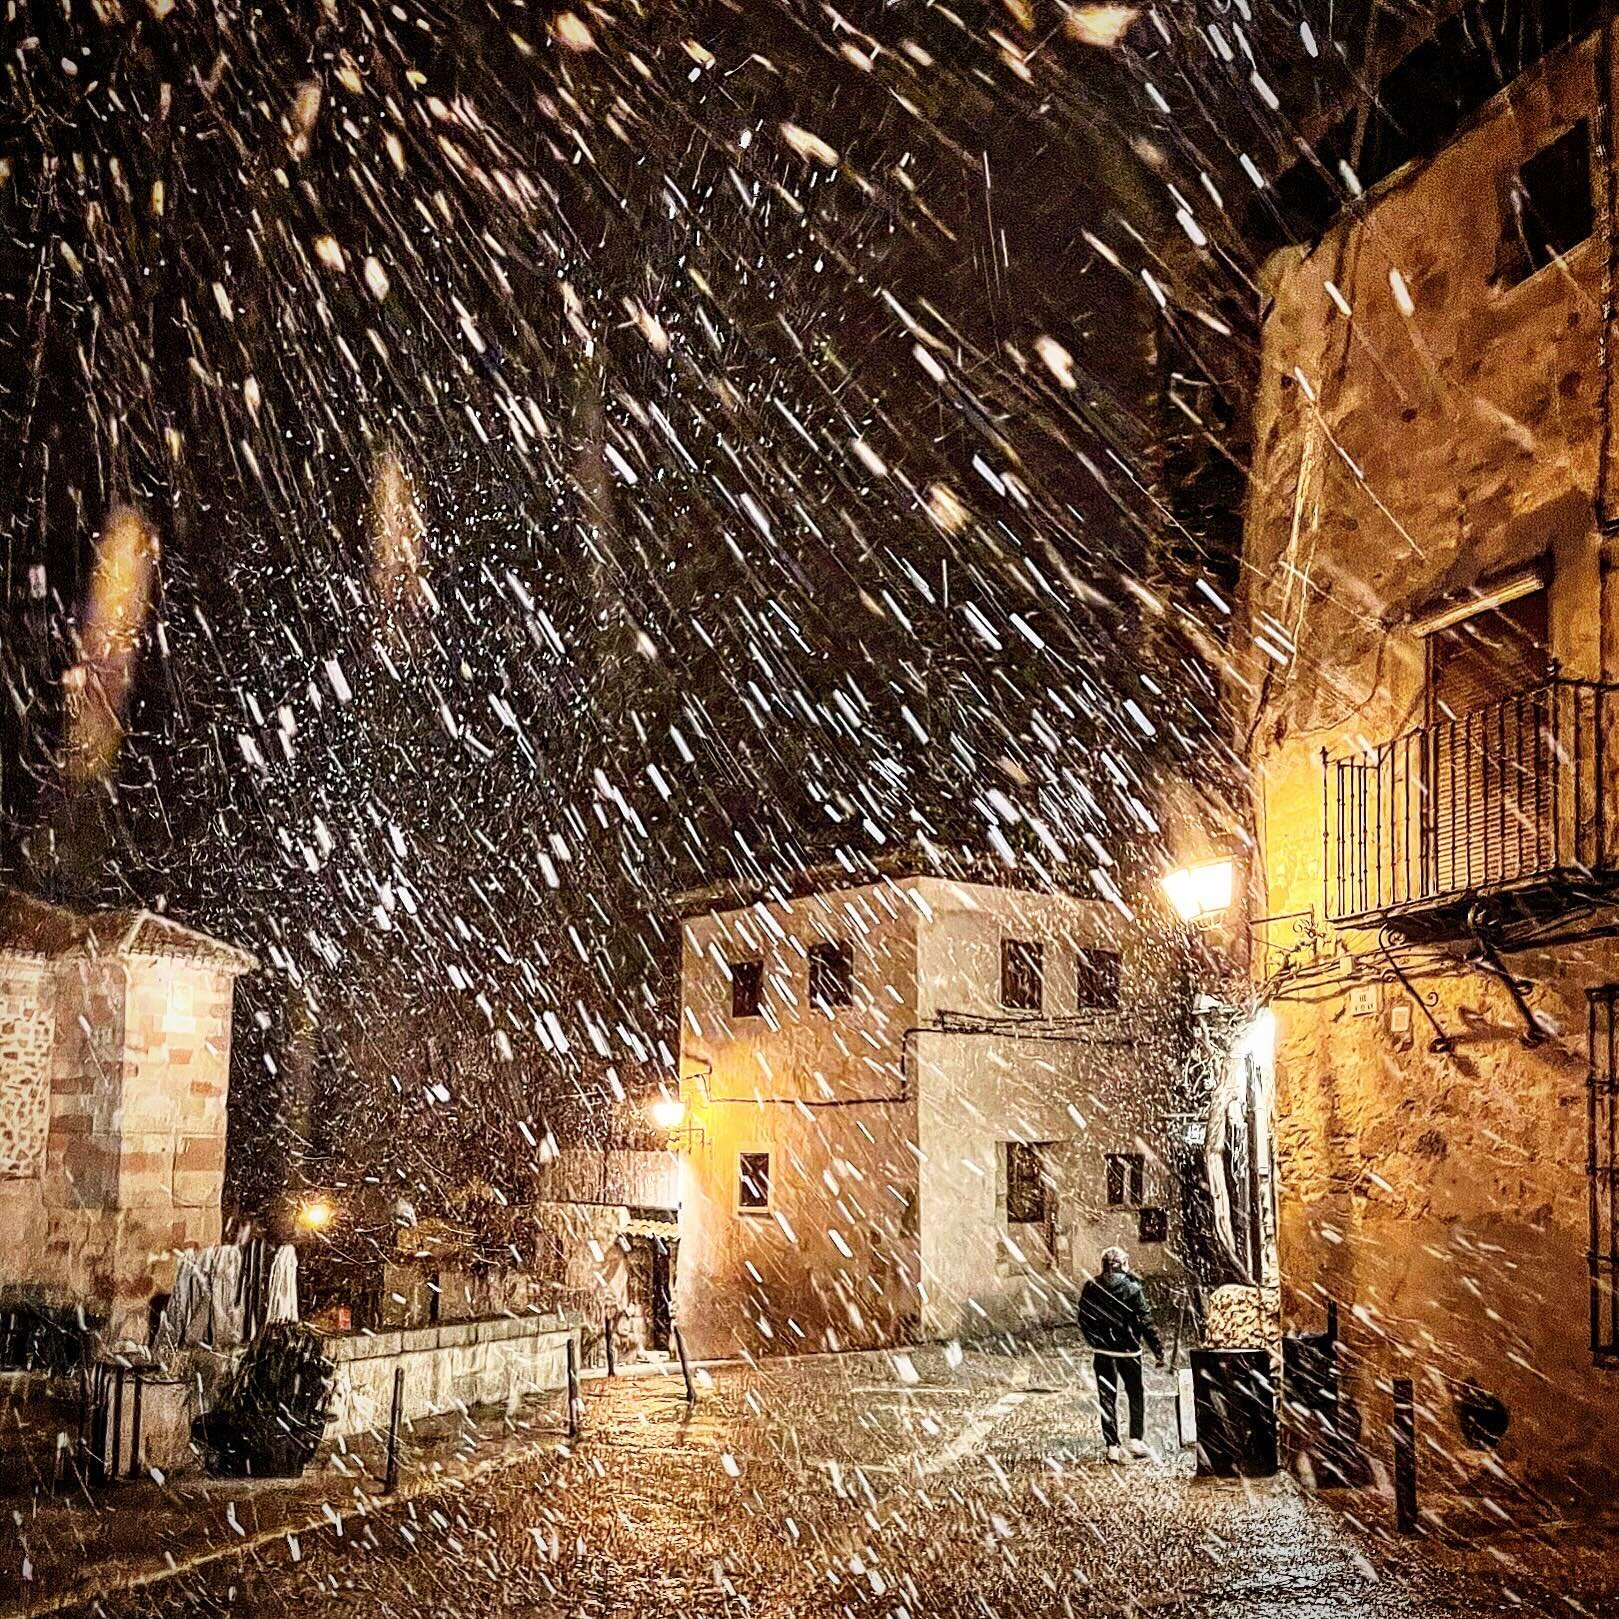 Swirling.  Winter rearing its head.  #snowstorm #village #cobblestone #history #Spain